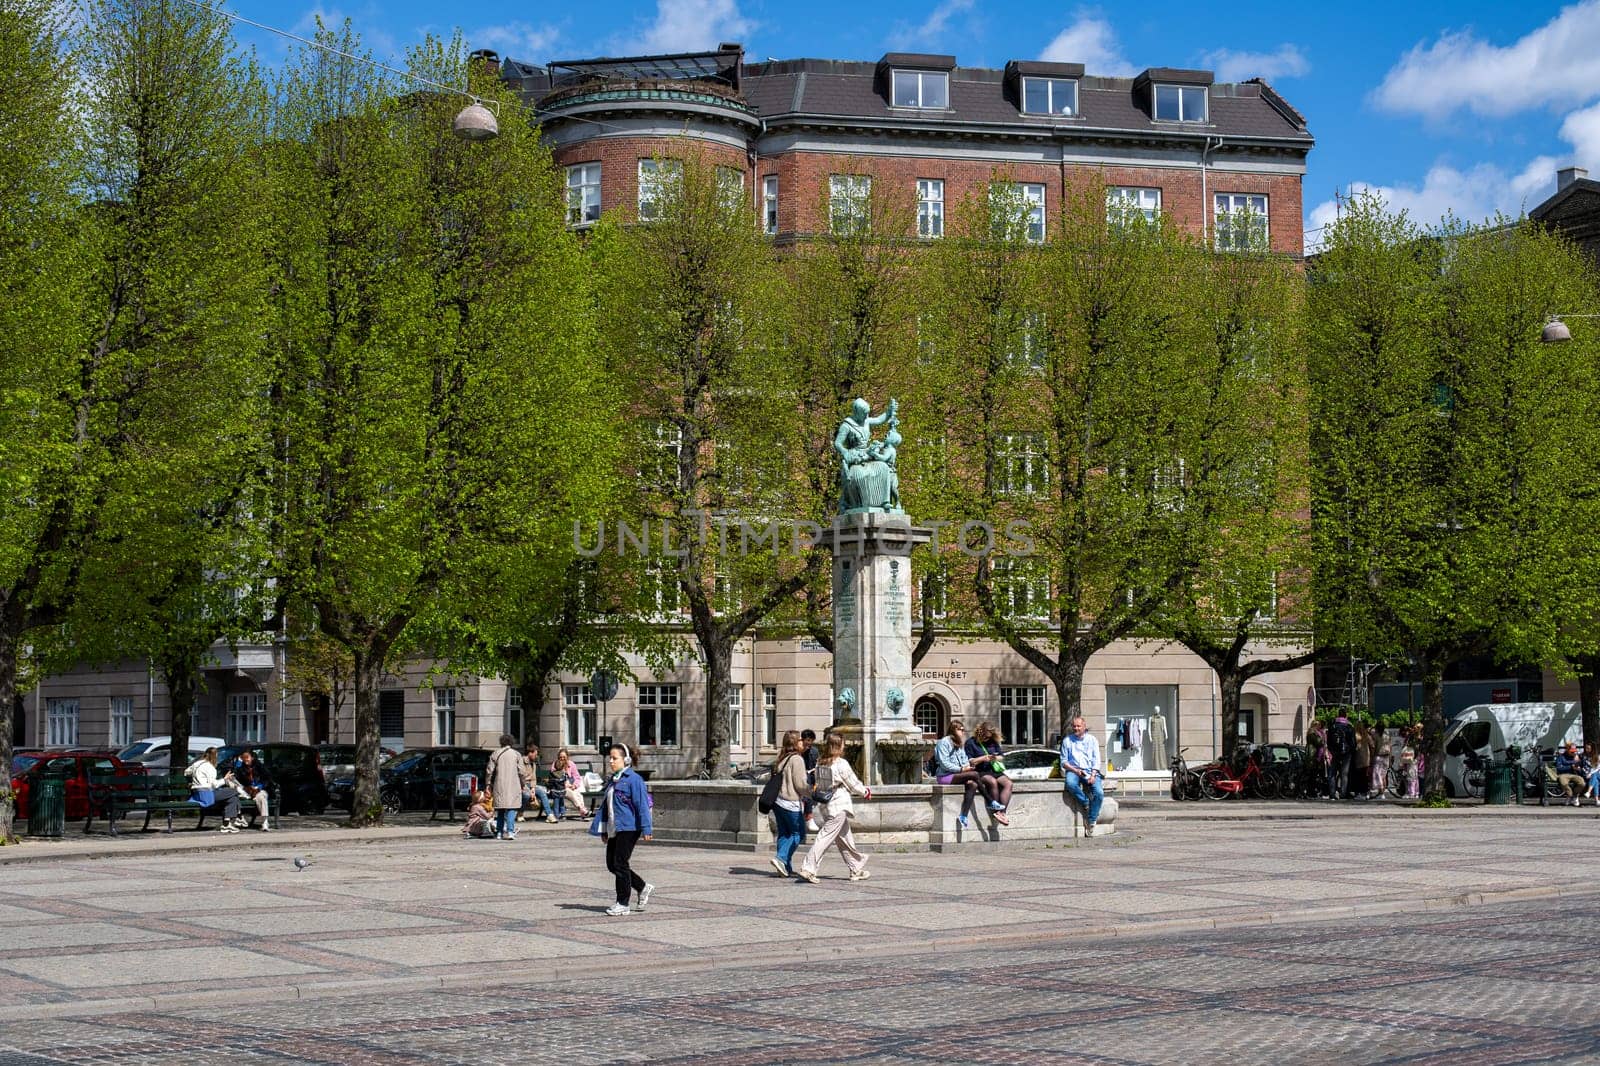 Sankt Thomas Plaza in Frederiksberg by oliverfoerstner